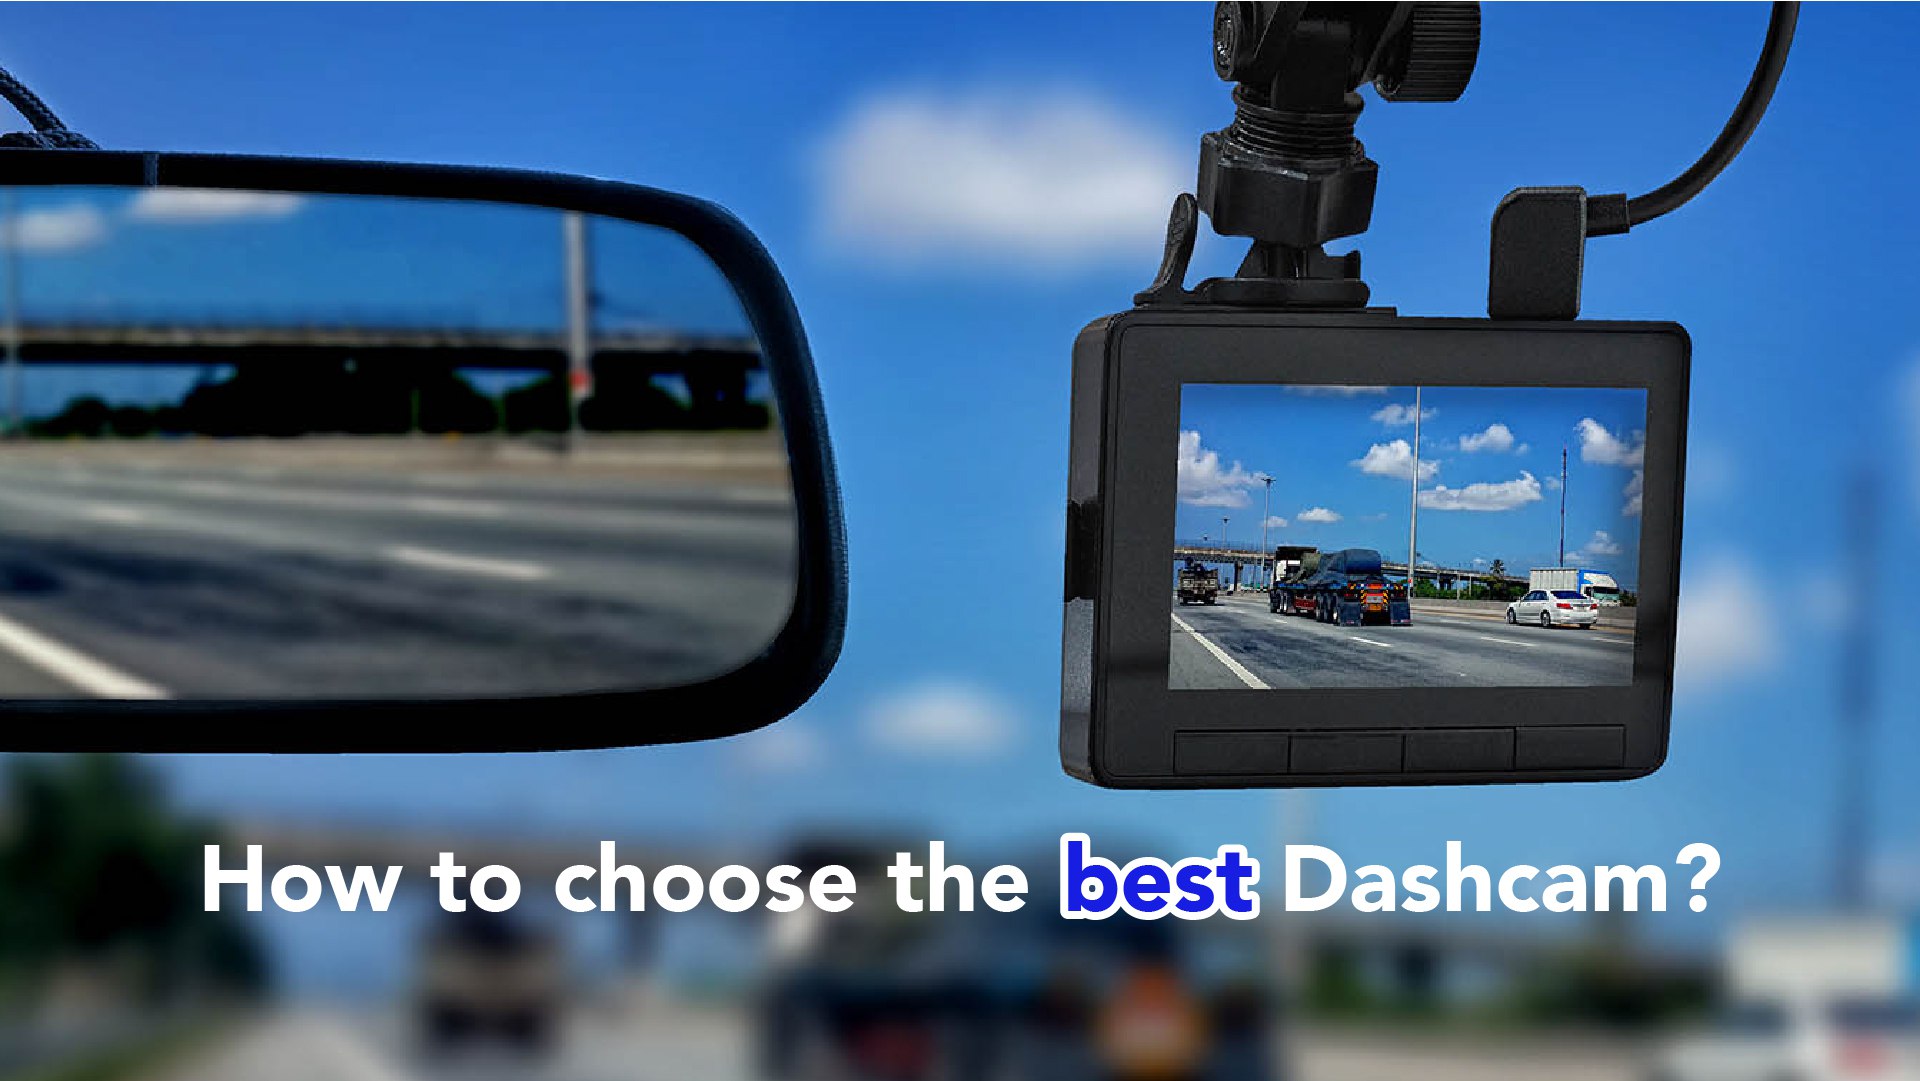 Dashcam: Functions, Features & Best Models